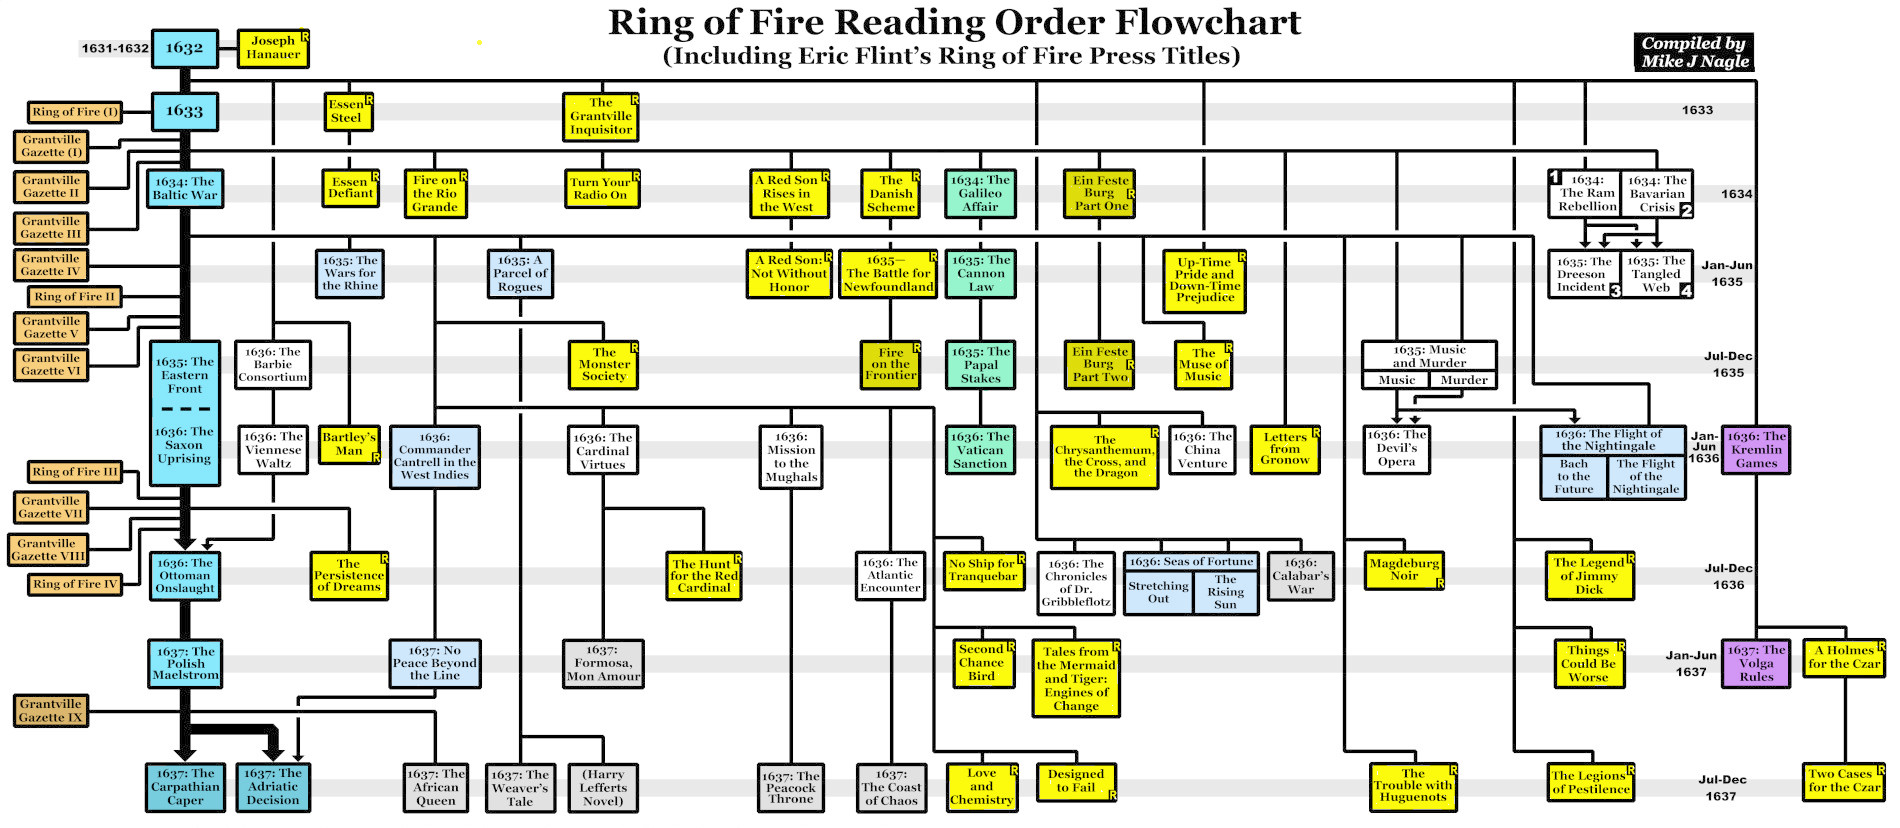 1632 series reading order - Eric Flint